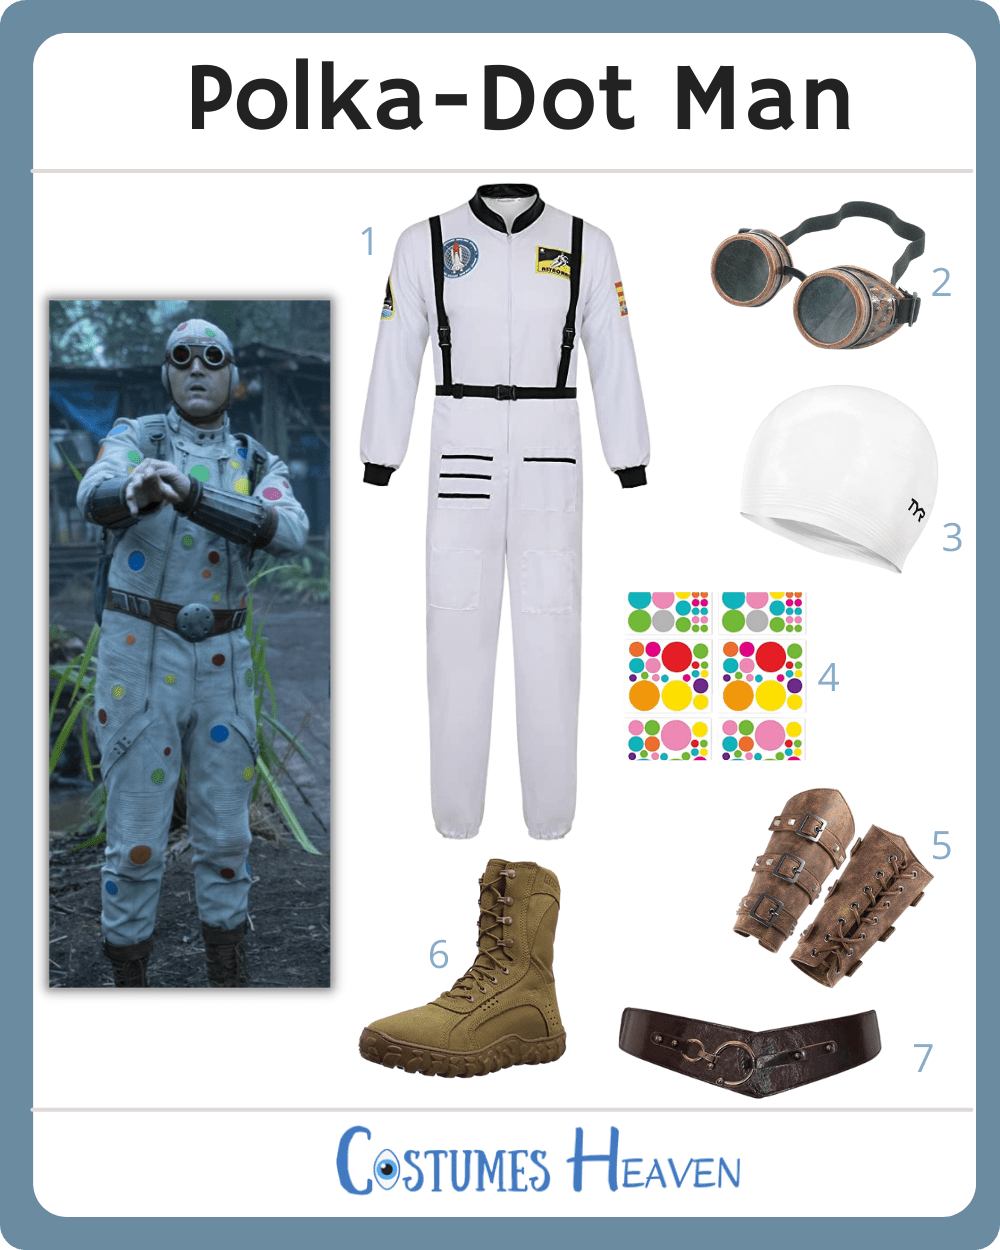 polka-dot man costume